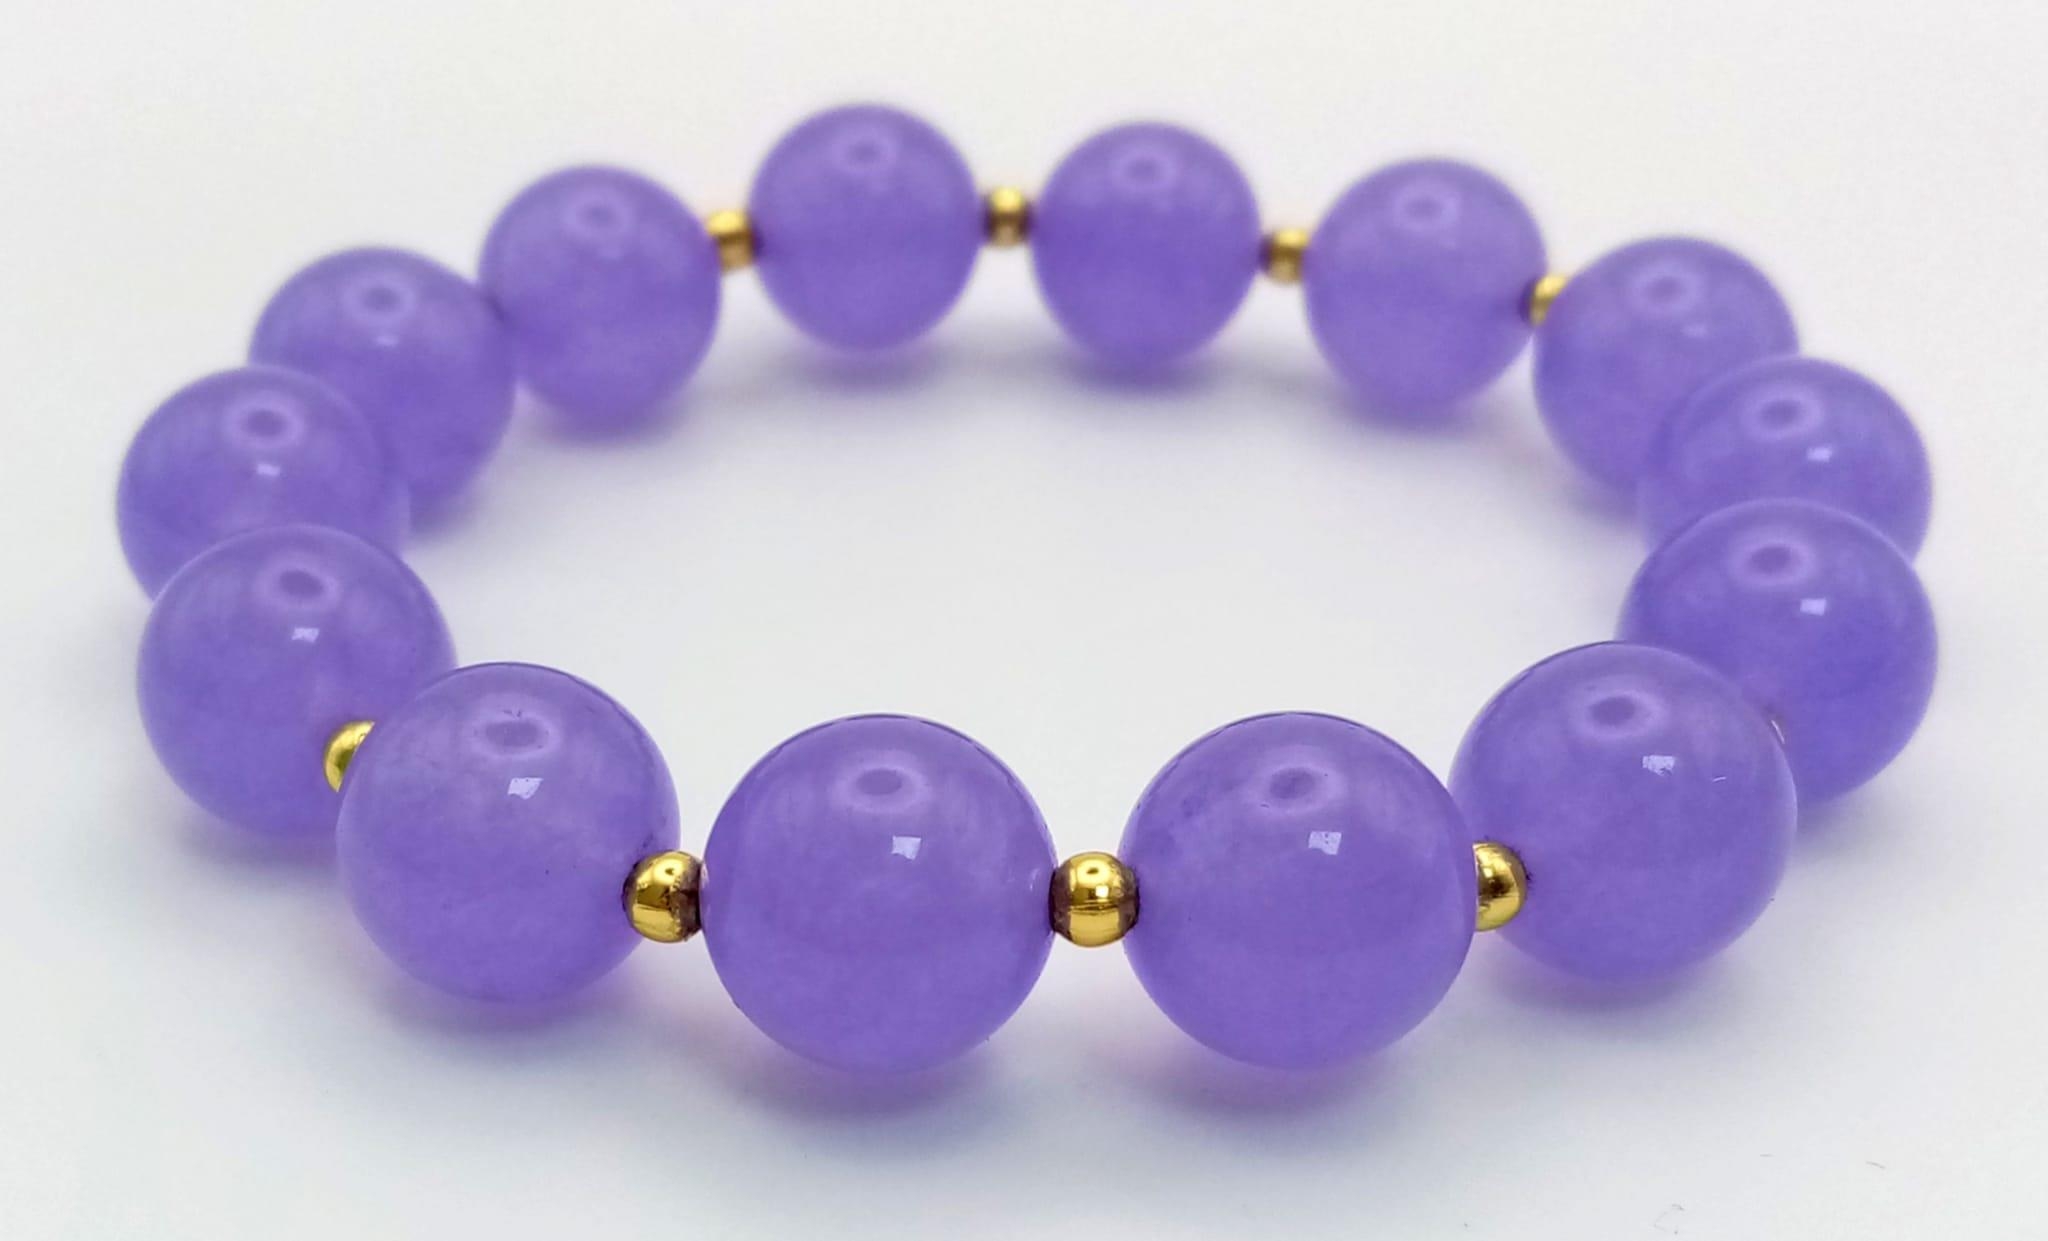 A Purple Jade Bead Expandable Bracelet.